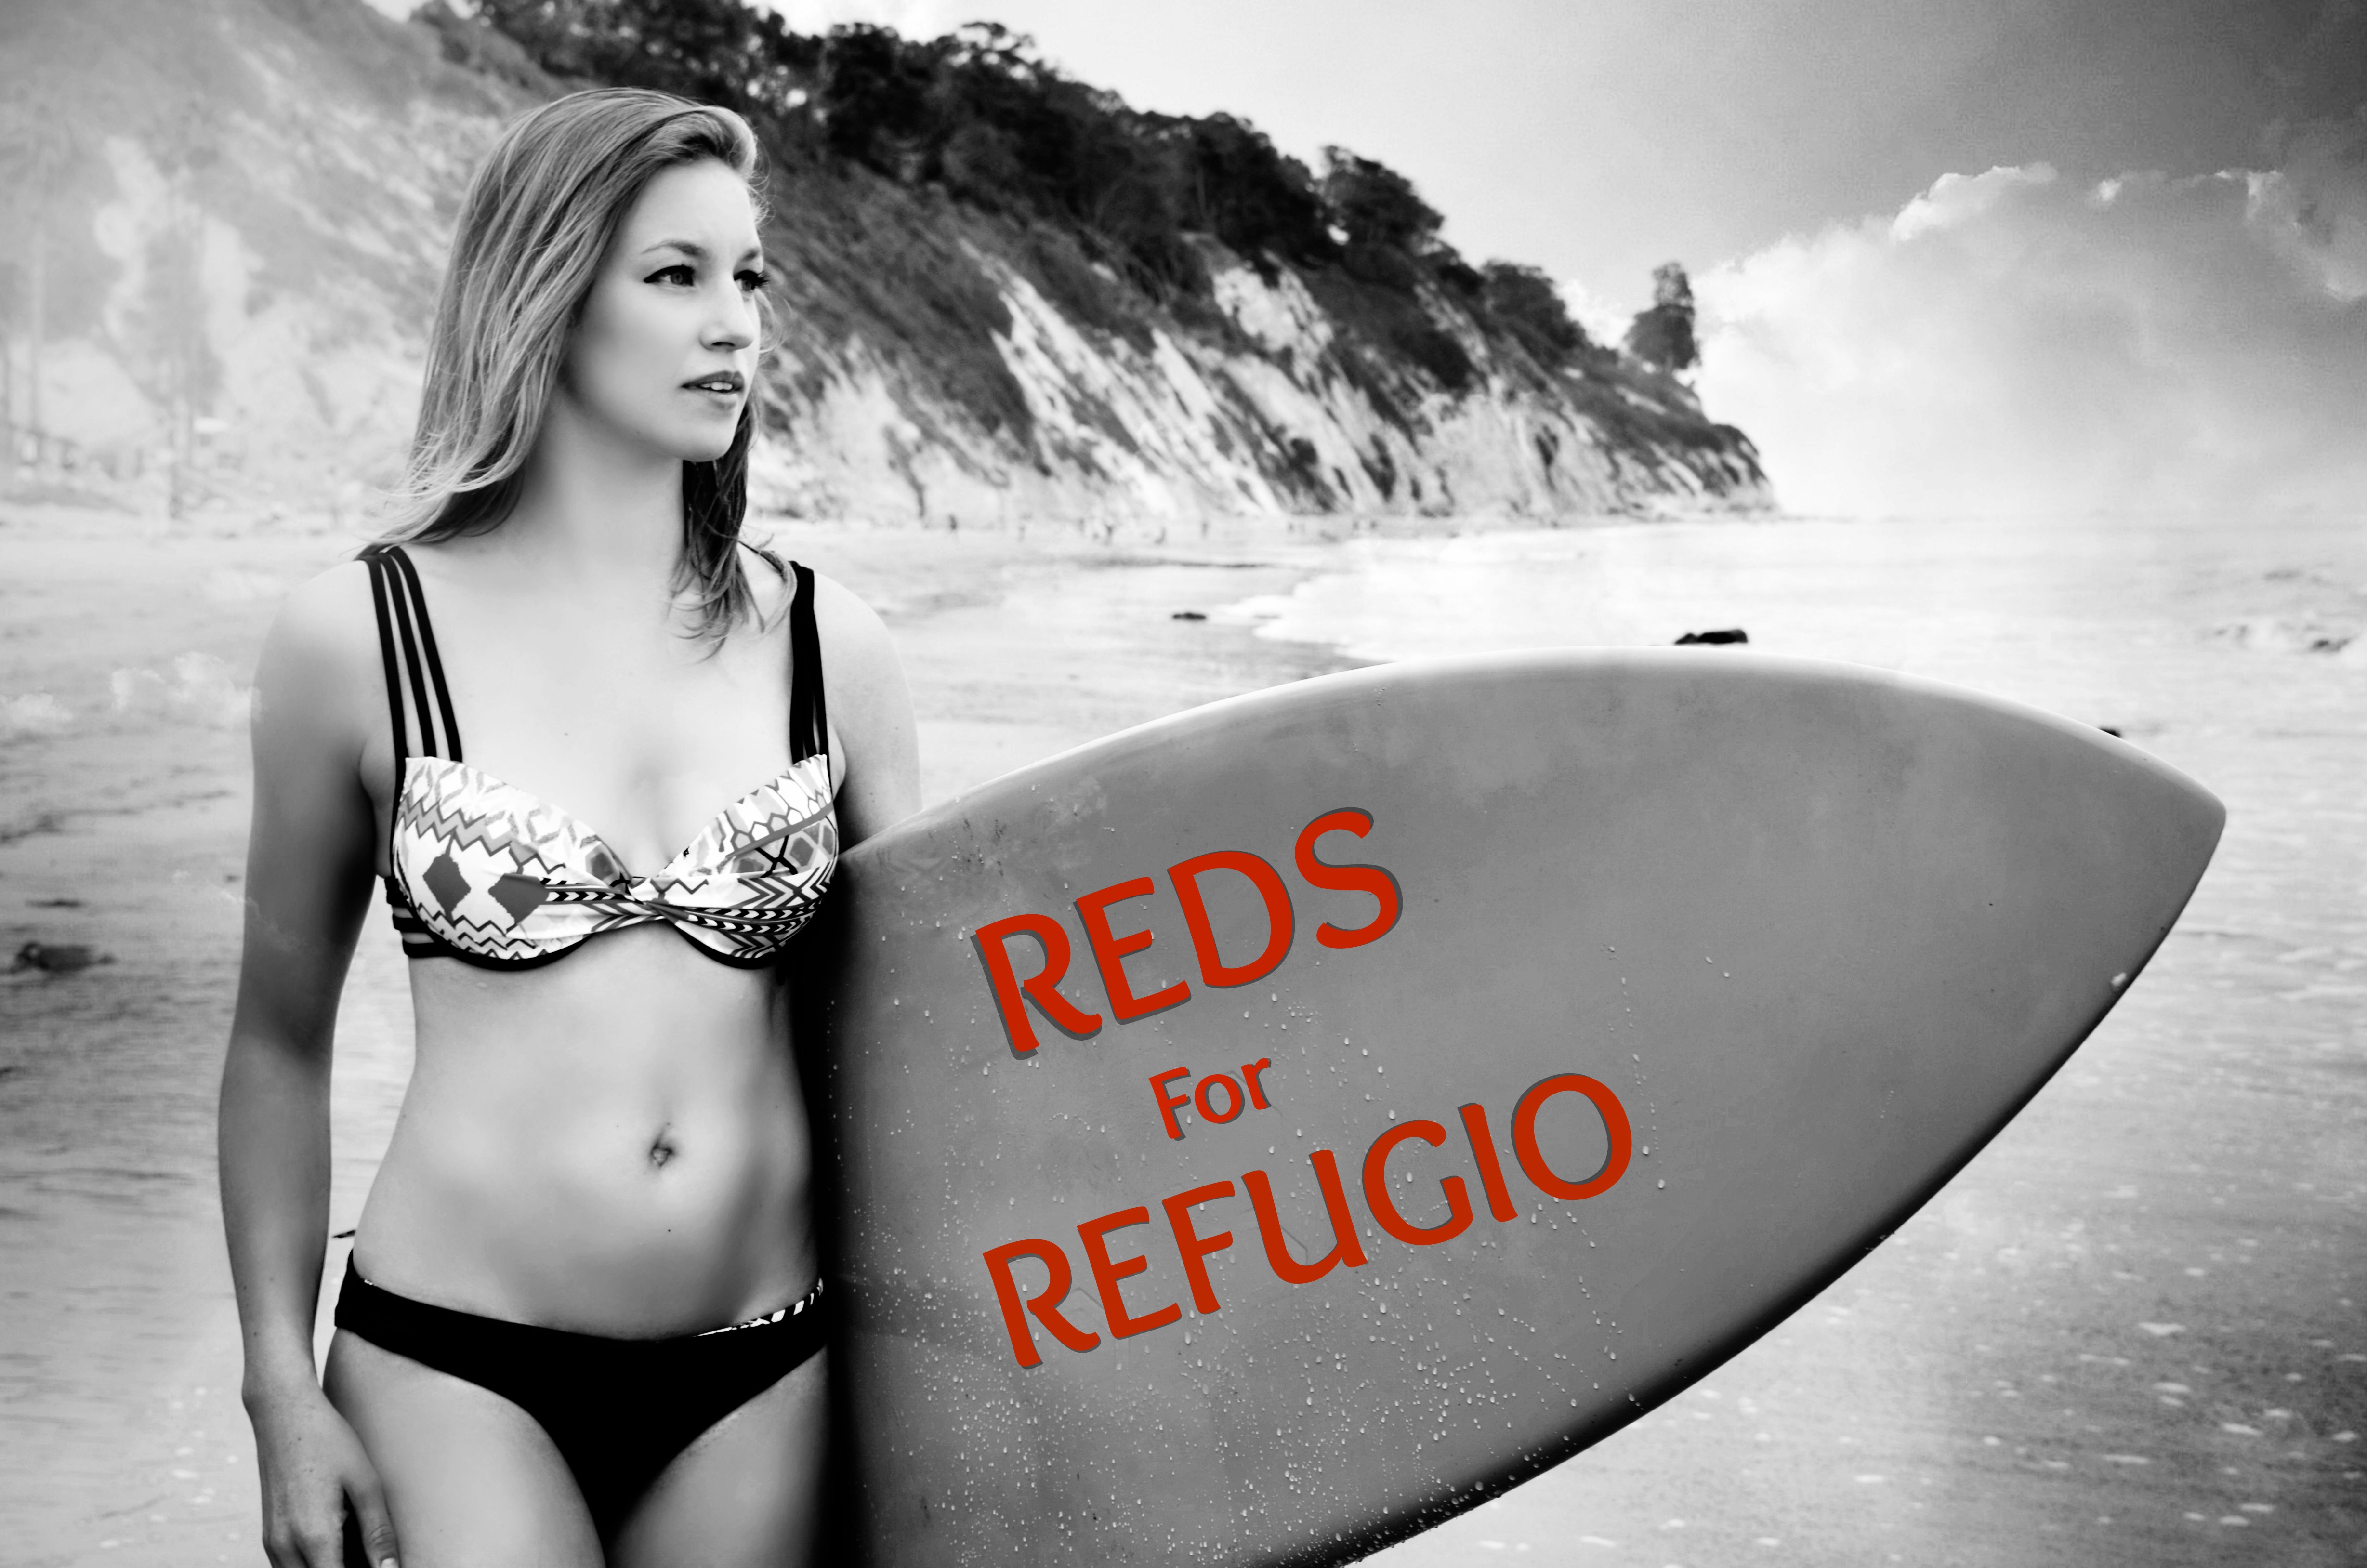 Photo shoot for the upcoming fundraiser "Reds for Refugio" Sunday June 7th! -Kari Jensen Photo By: Kari Jensen